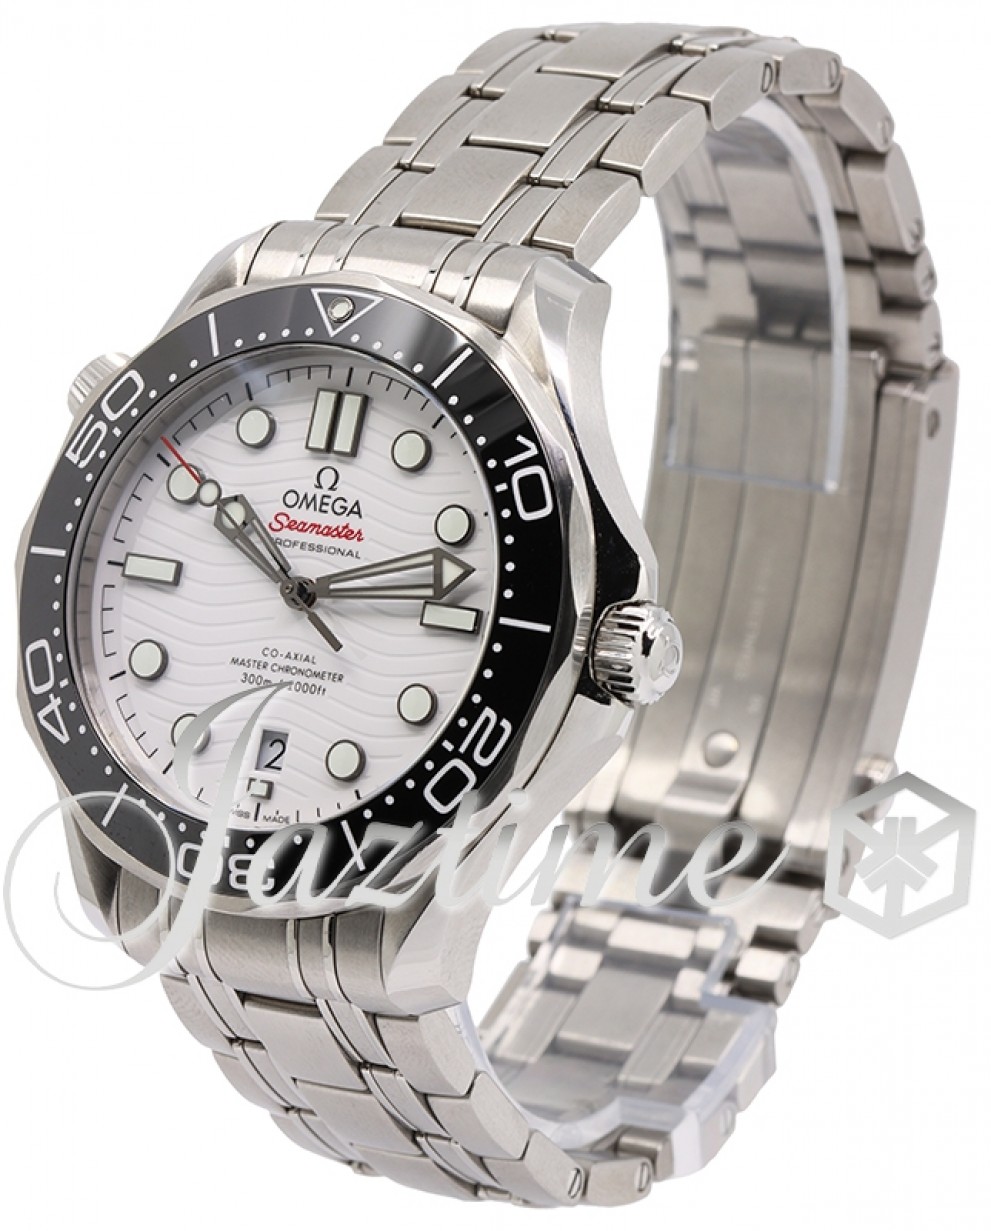 Diver 300M Seamaster Steel Chronometer Watch 210.30.42.20.04.001